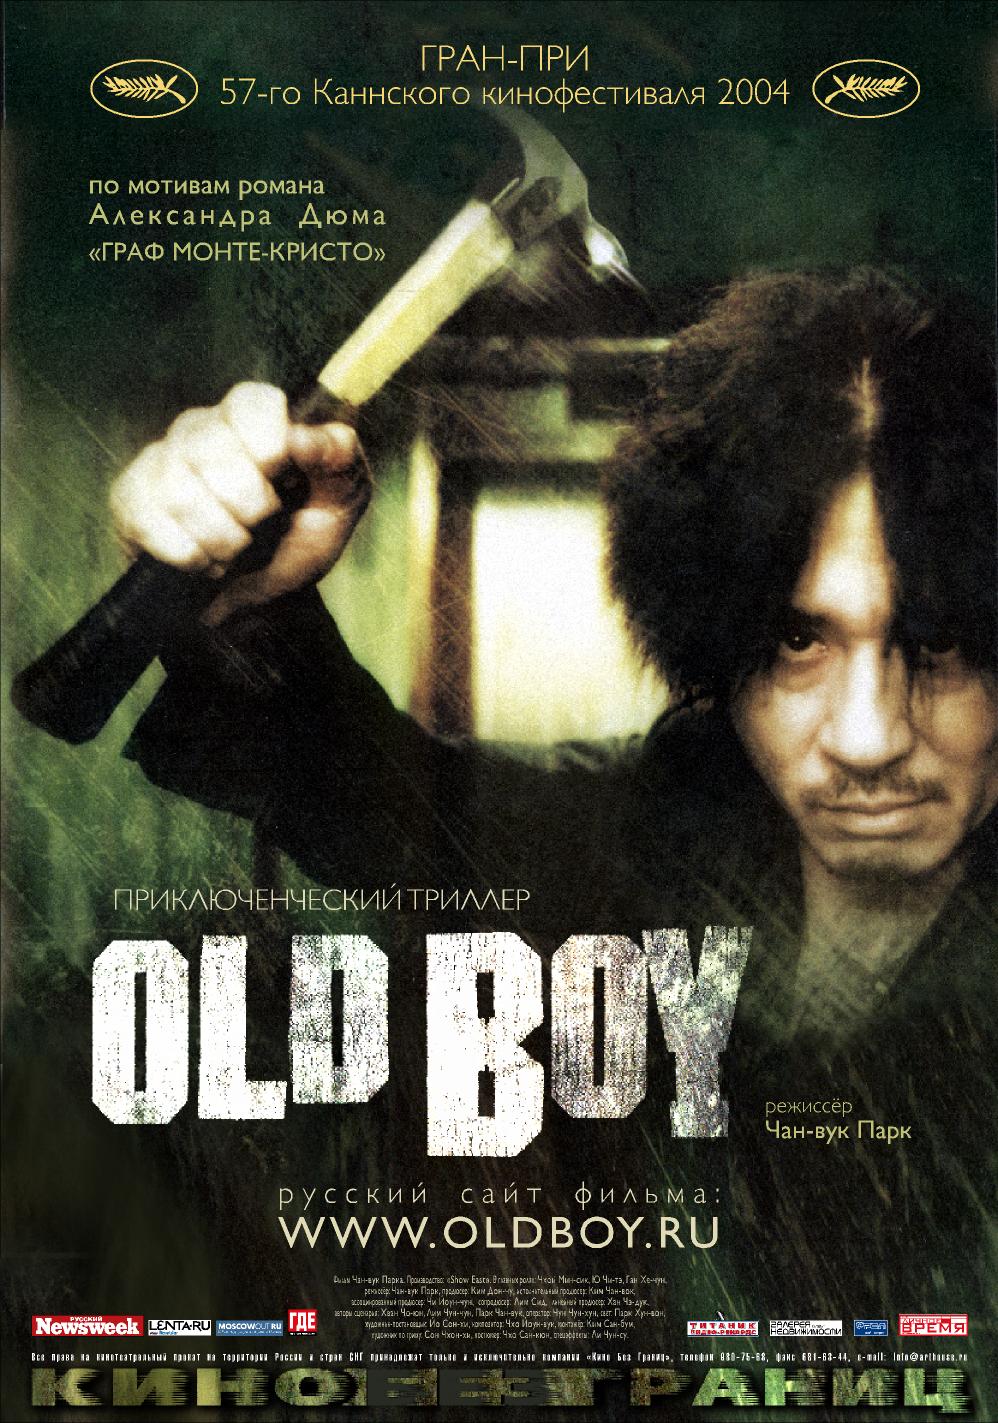 Oldboy movie